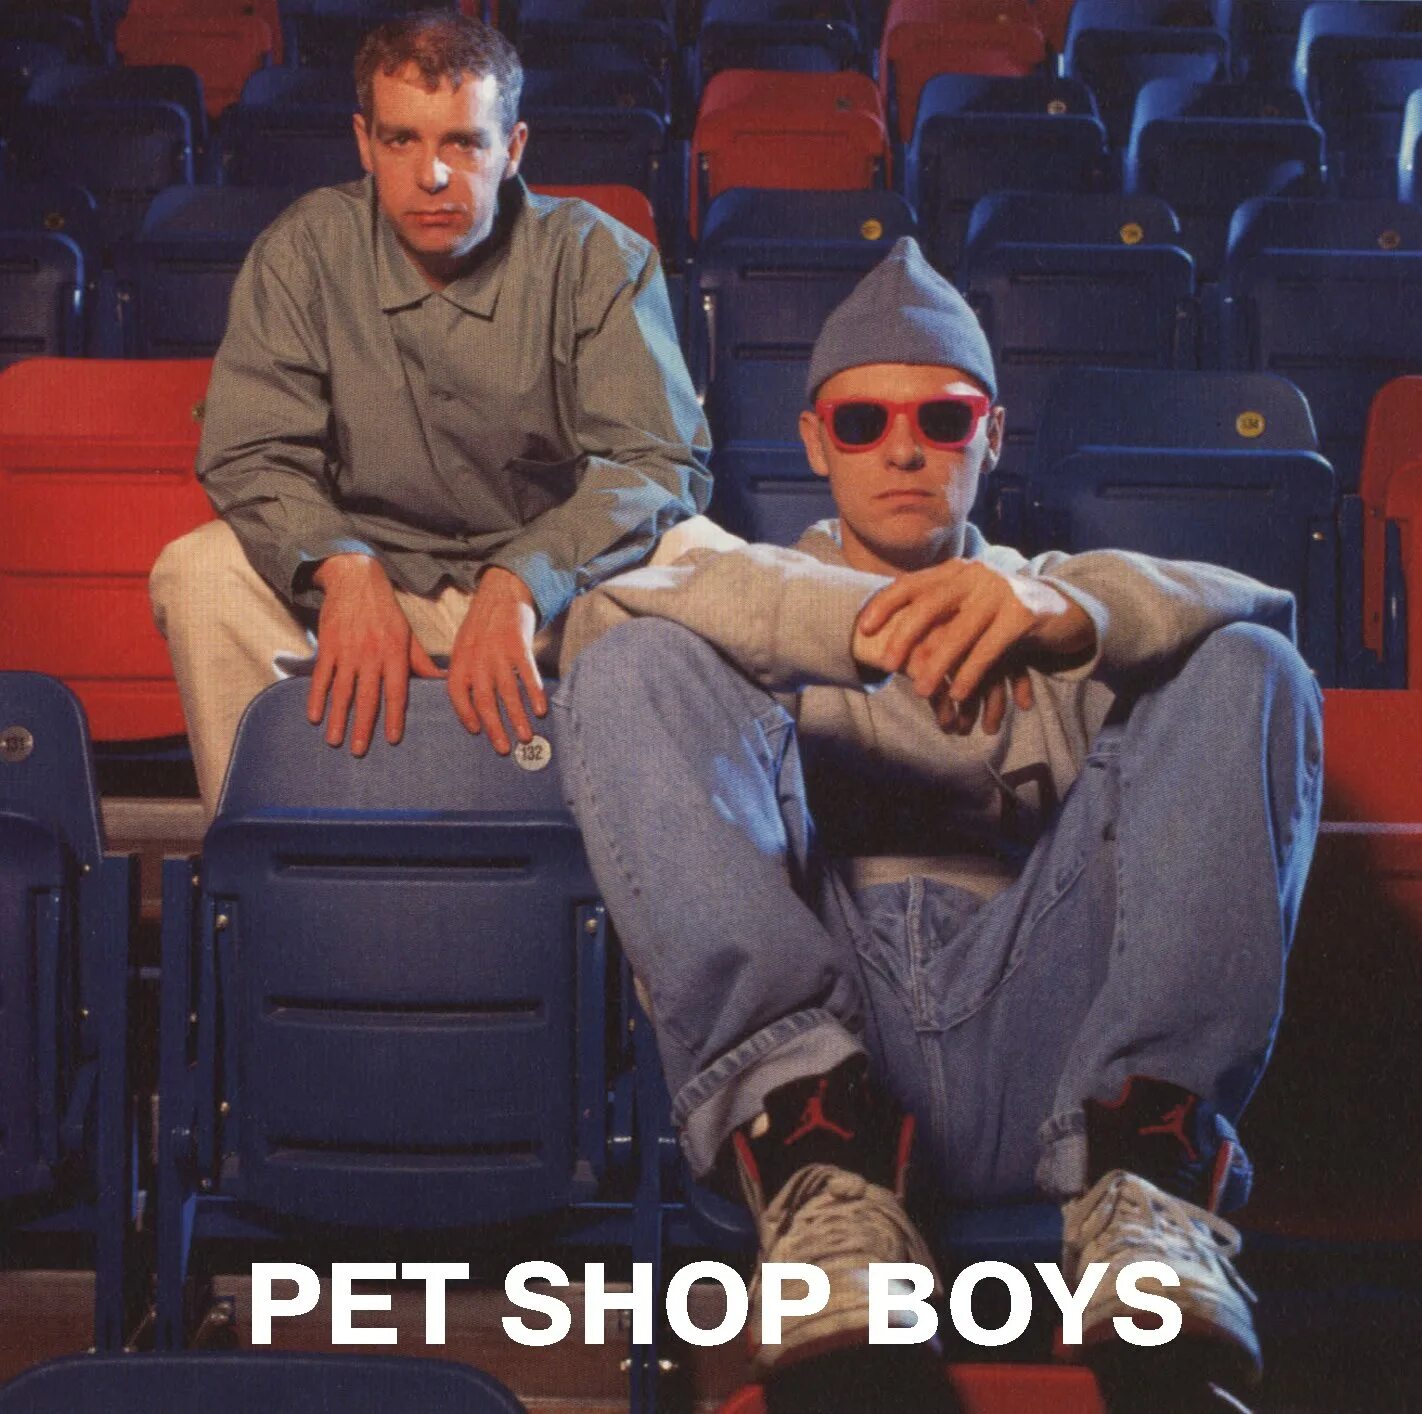 Пет шоп бойс хиты слушать. Pet shop boys. Pet shop boys фото. Pet shop boys Single. Pet shop boys хиты.